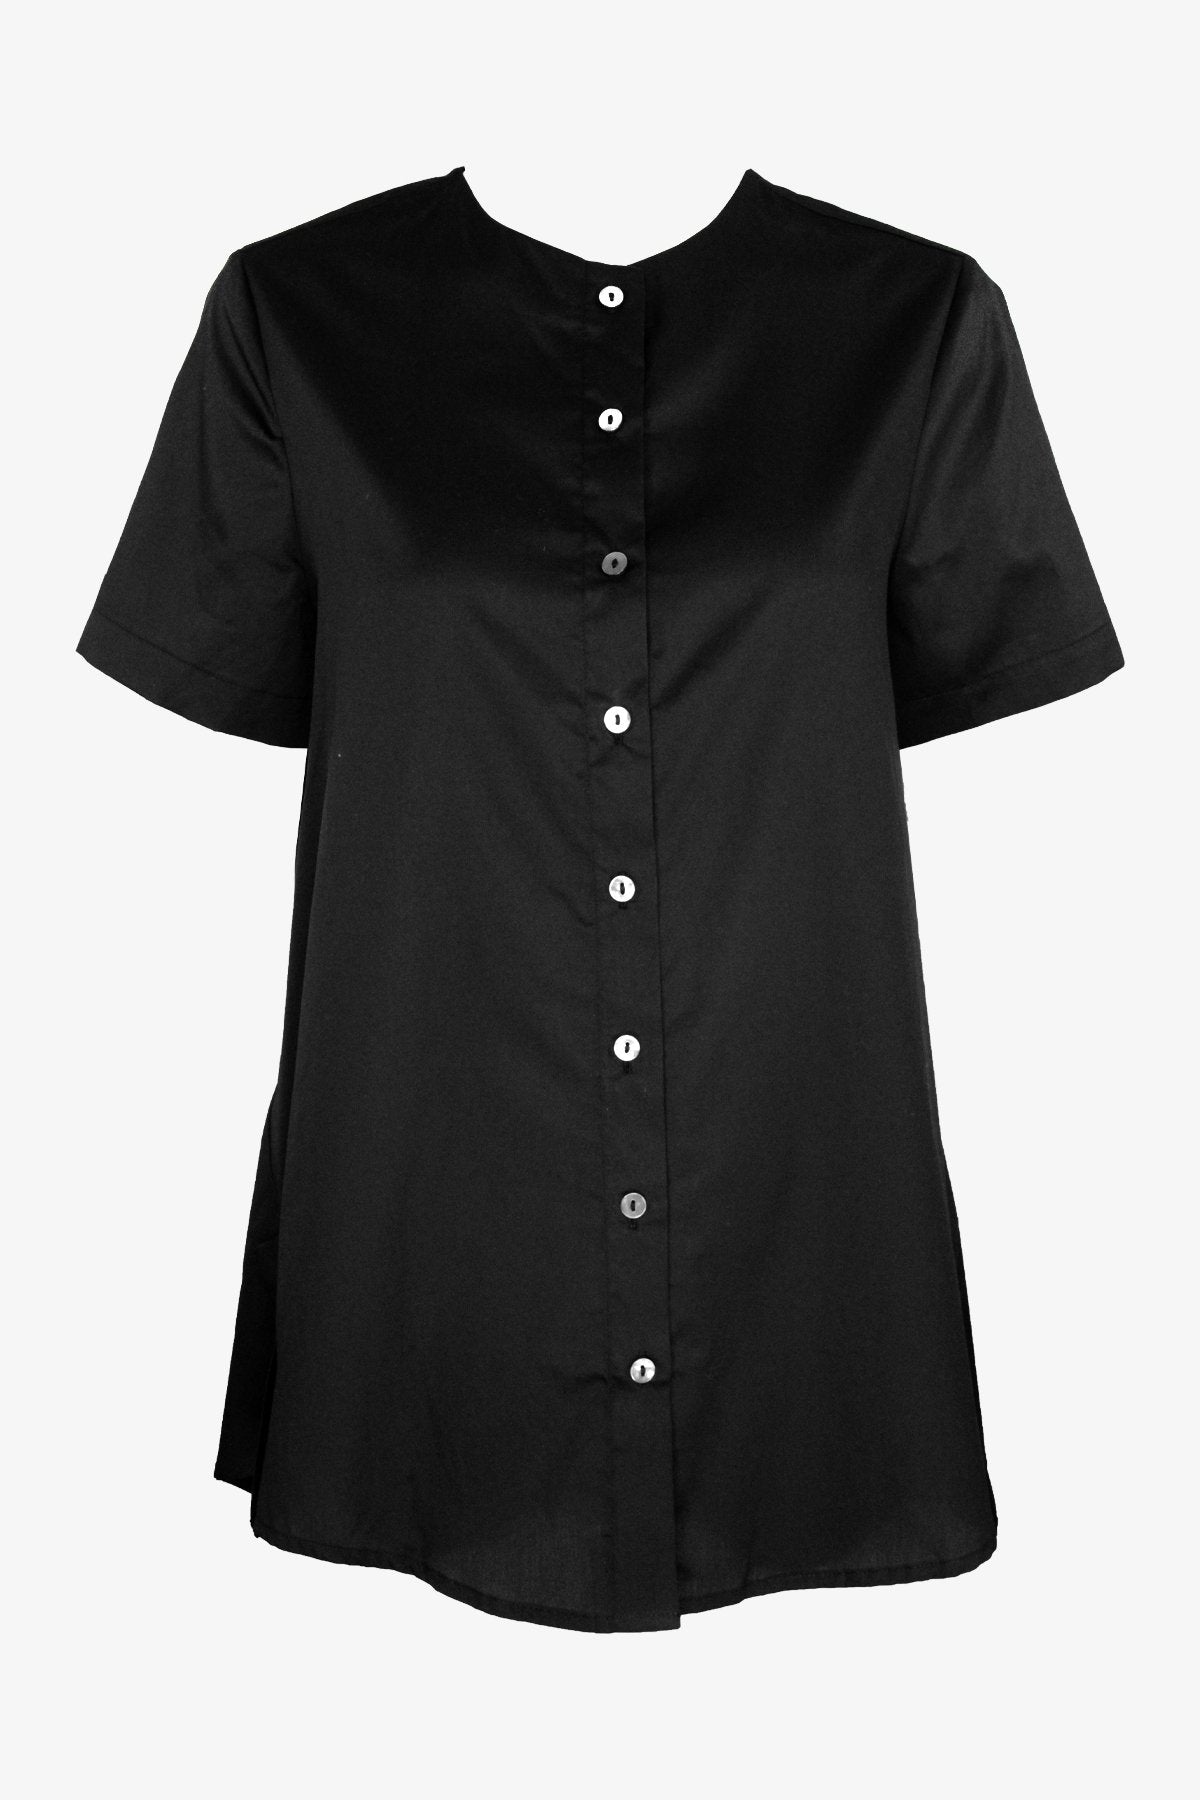 Kefi Tunic in Black - shop-olivia.com